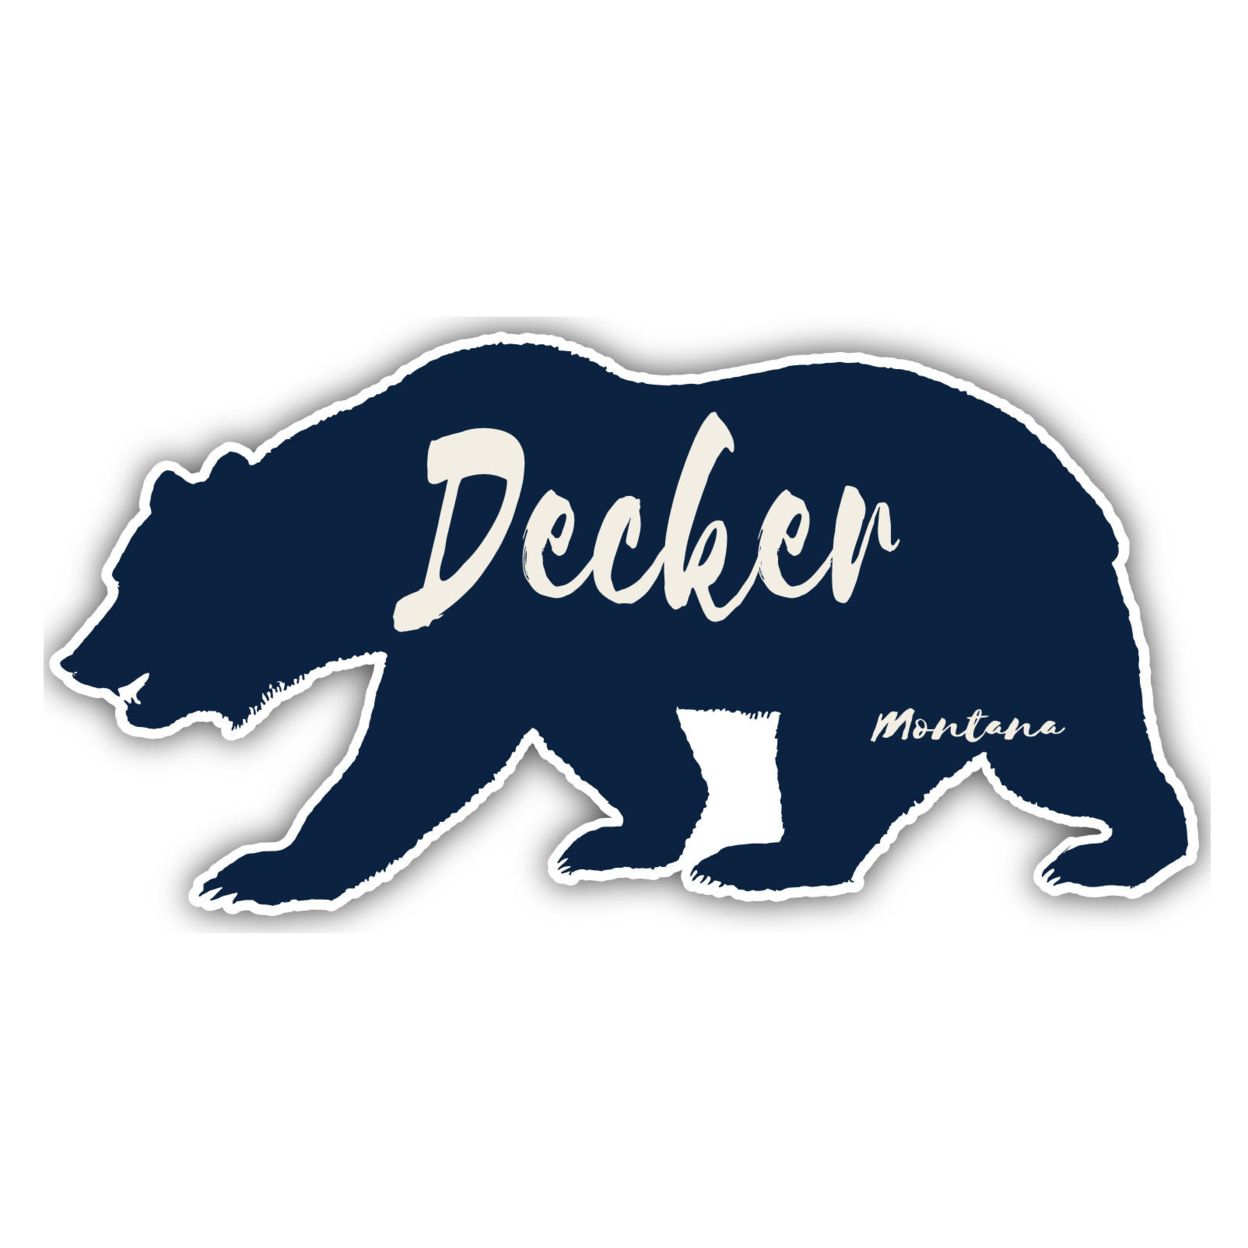 Decker Montana Souvenir Decorative Stickers (Choose Theme And Size) - Single Unit, 2-Inch, Bear